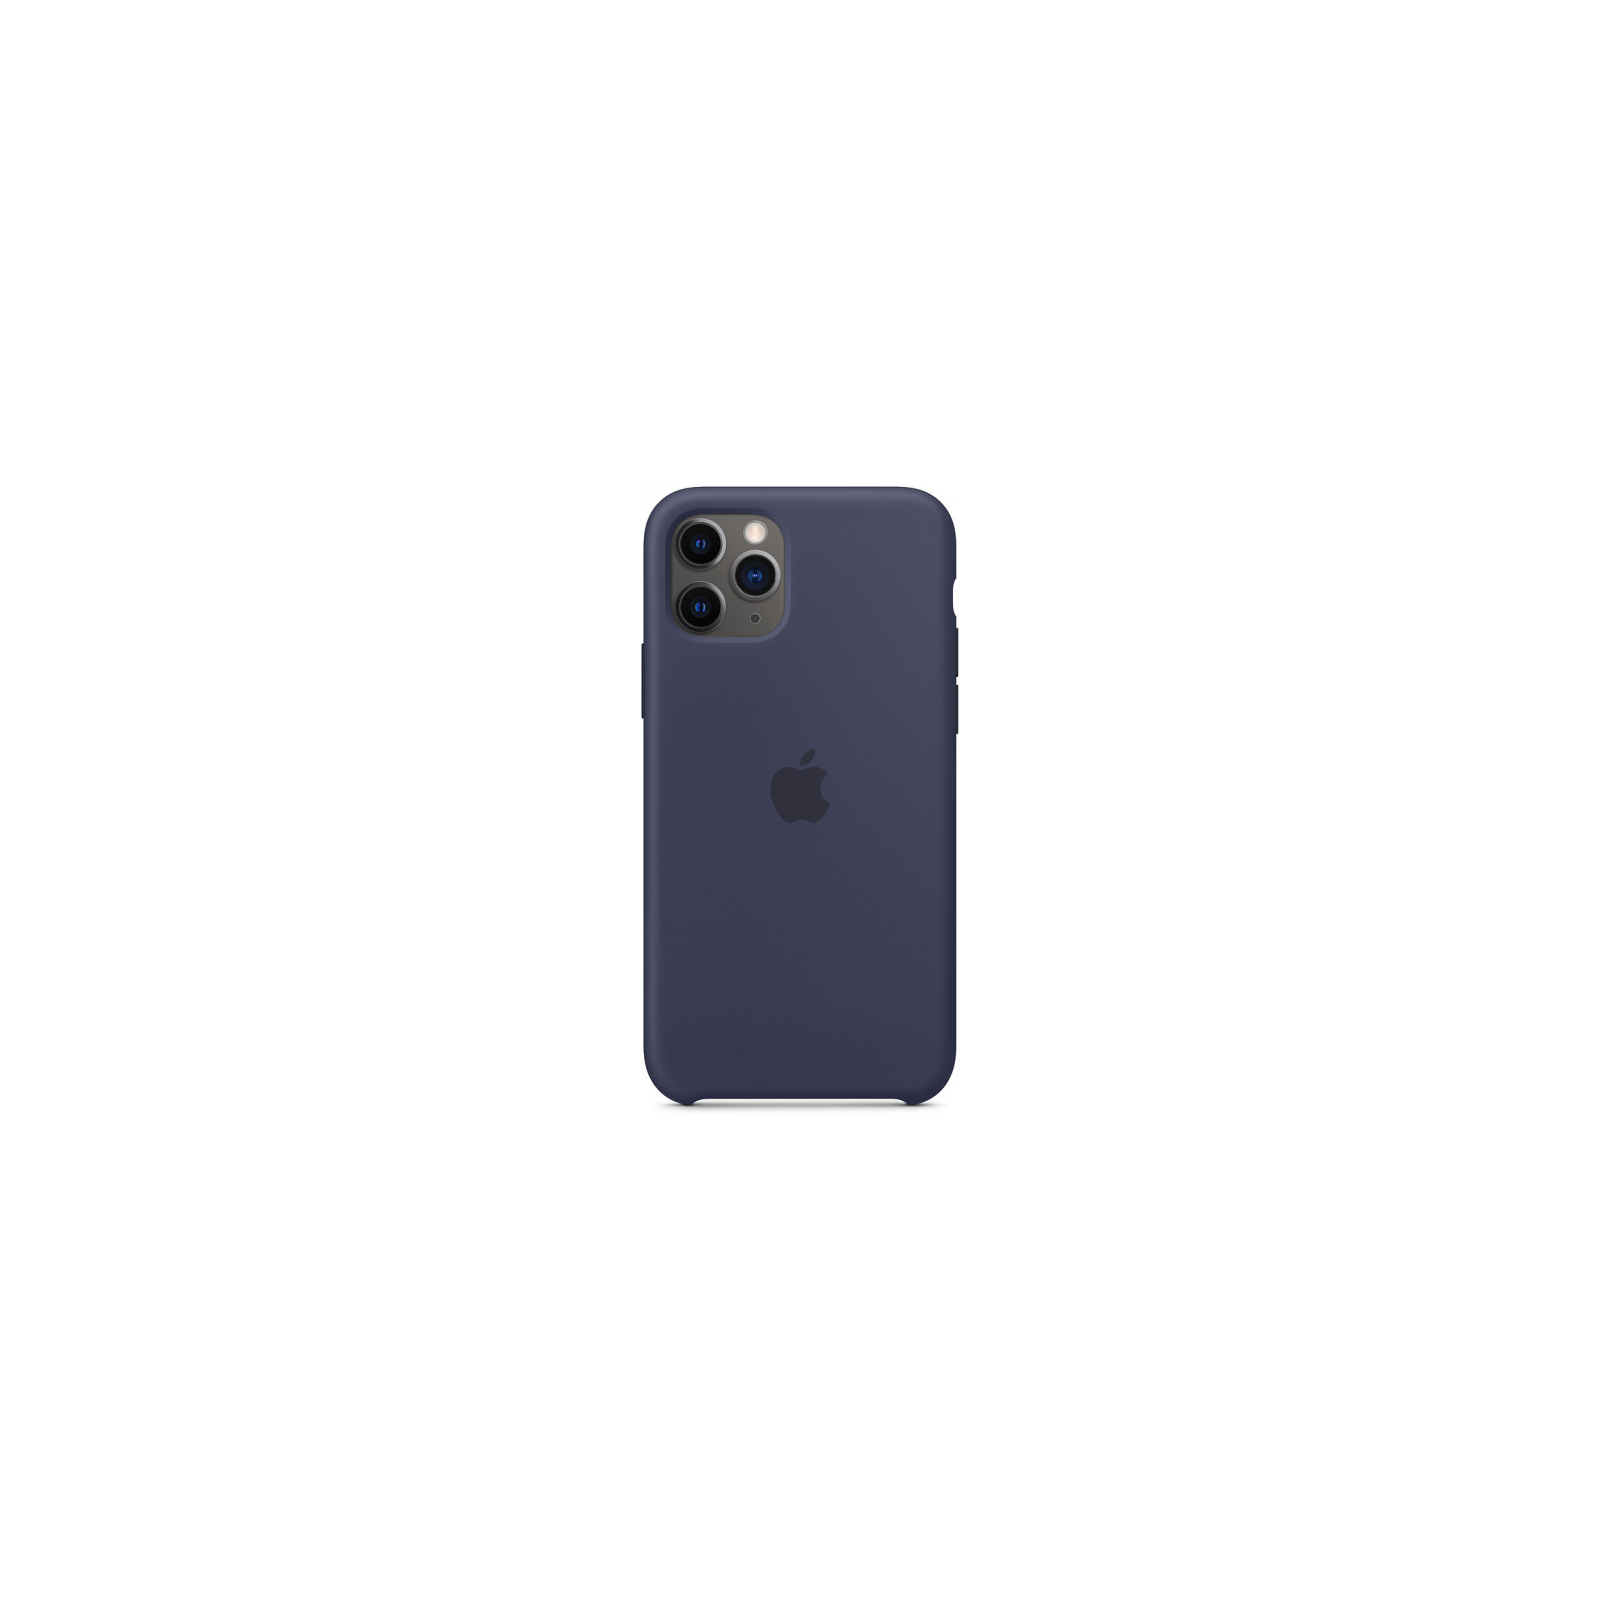 Чехол для мобильного телефона Apple iPhone 11 Pro Silicone Case - Midnight Blue (MWYJ2ZM/A)